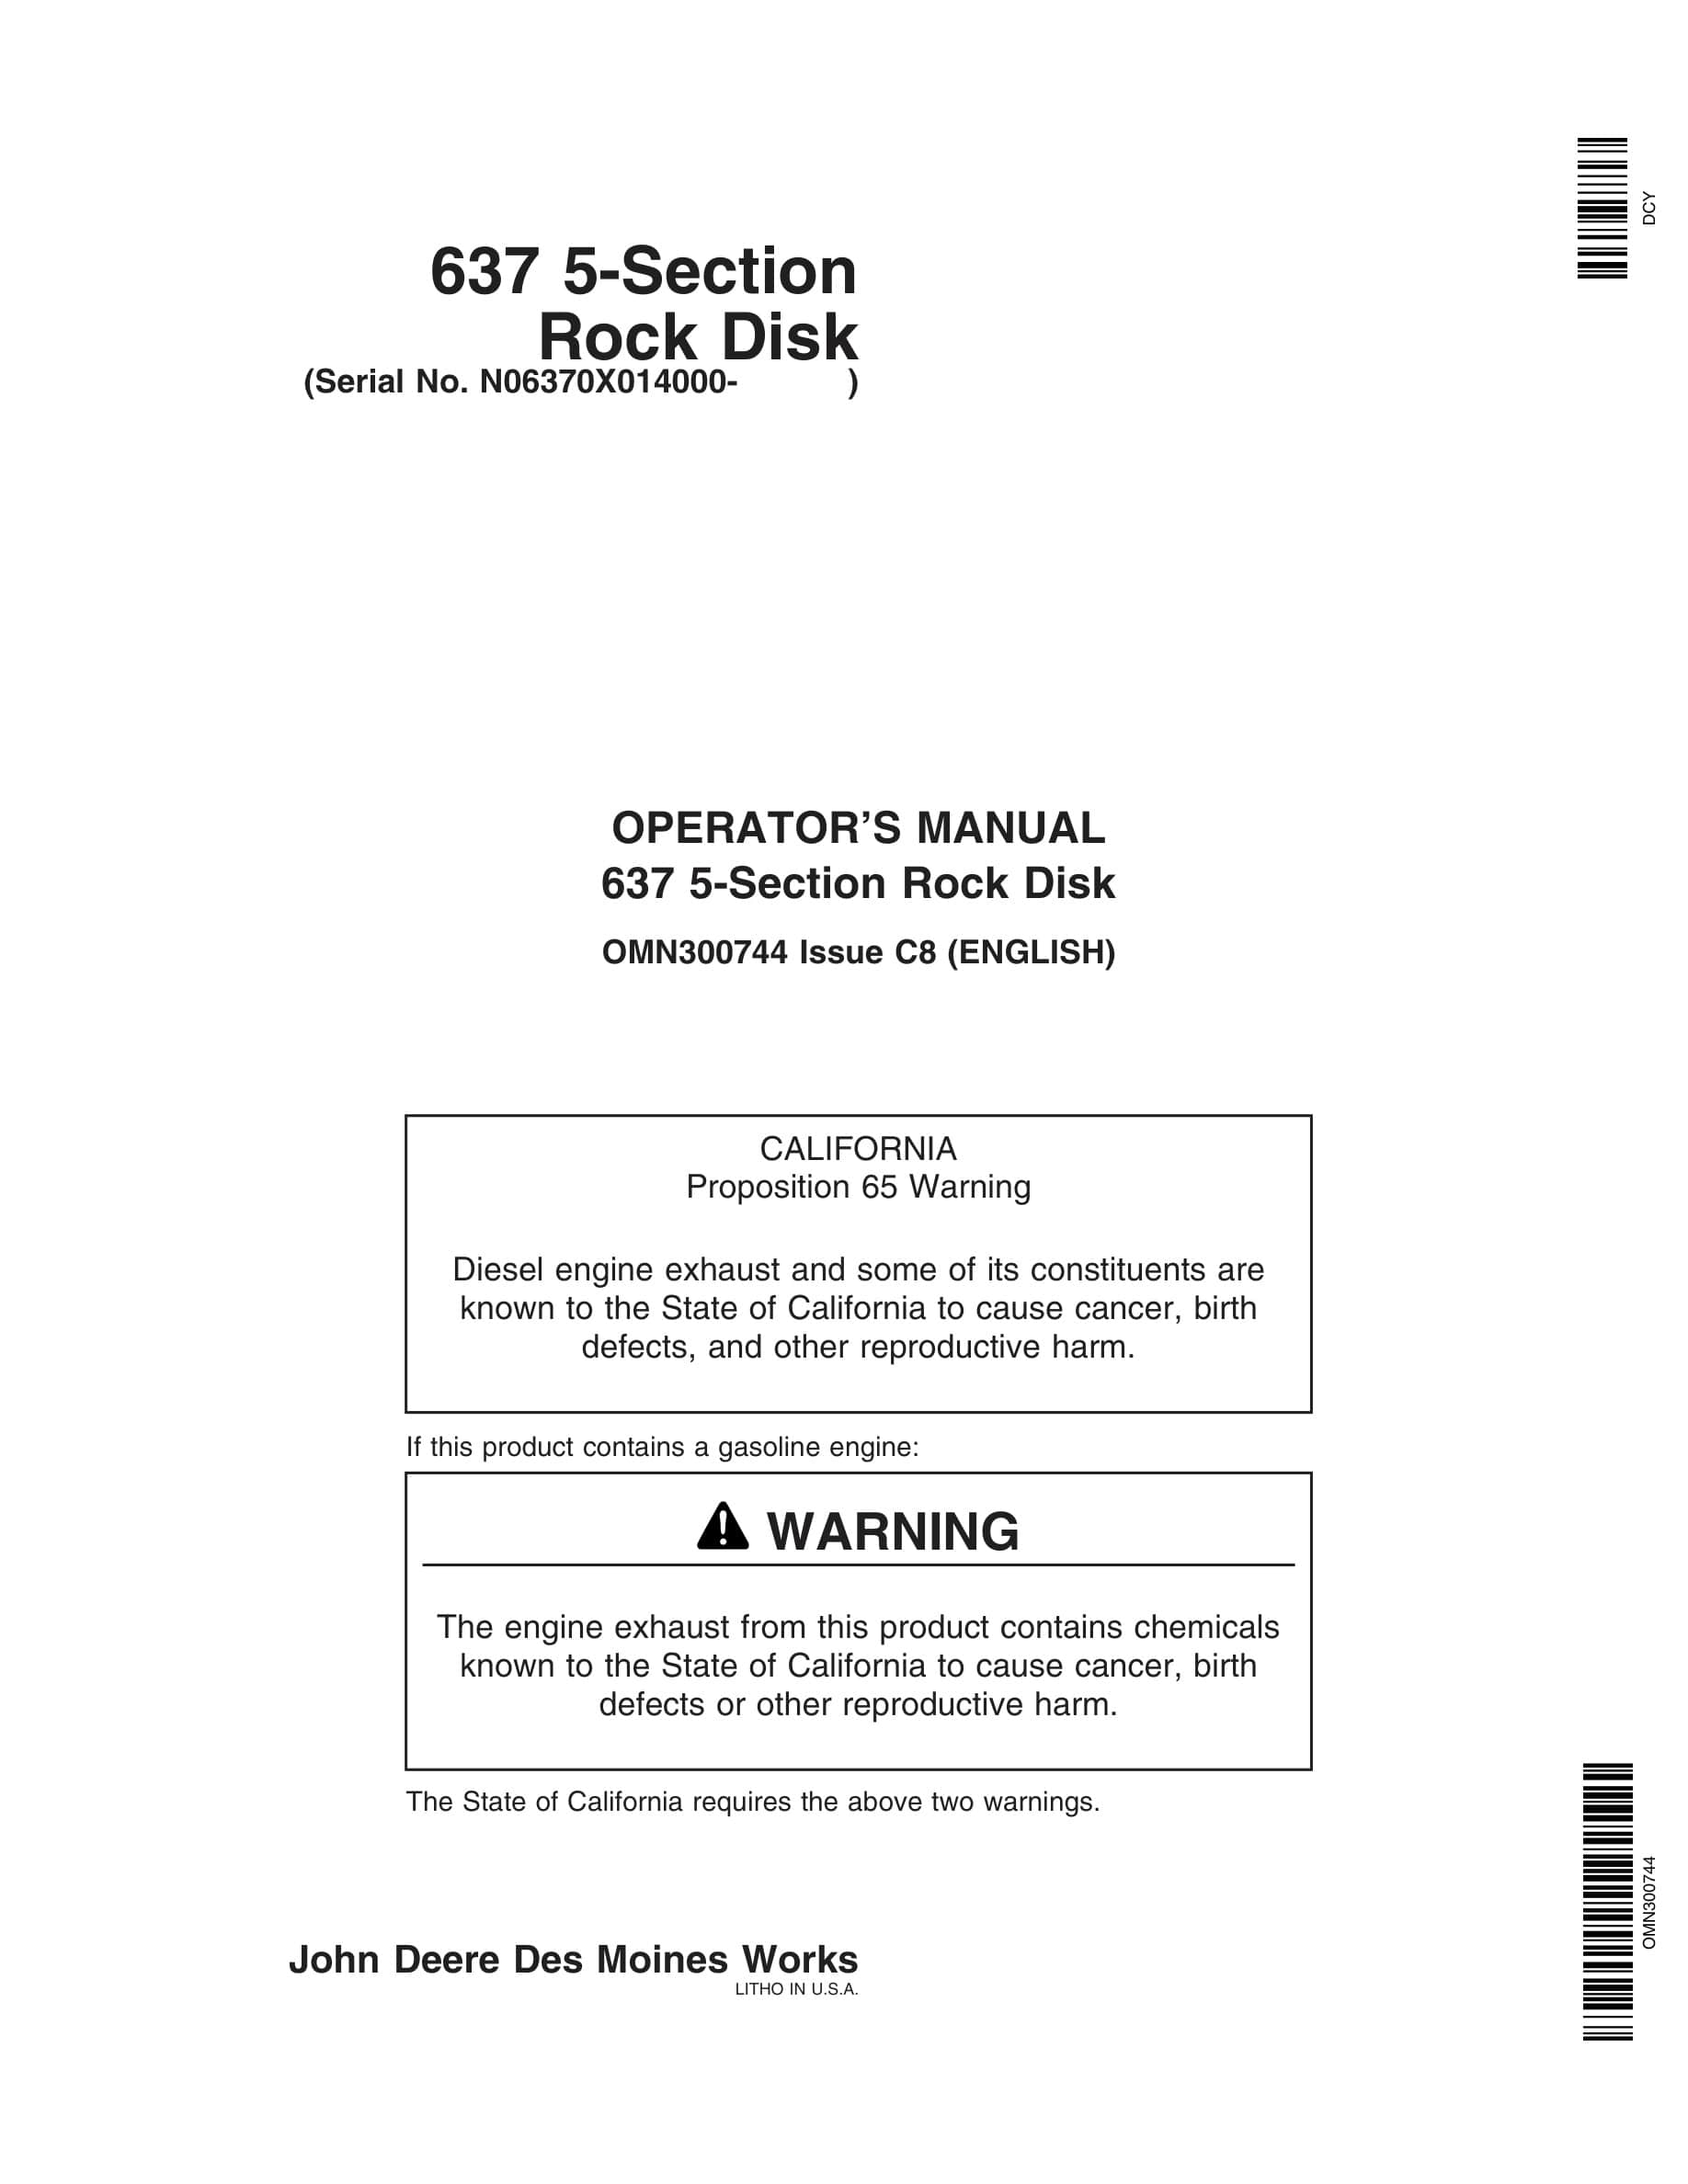 John Deere 637 5-Section Rock Disk Operator Manual OMN300744-1